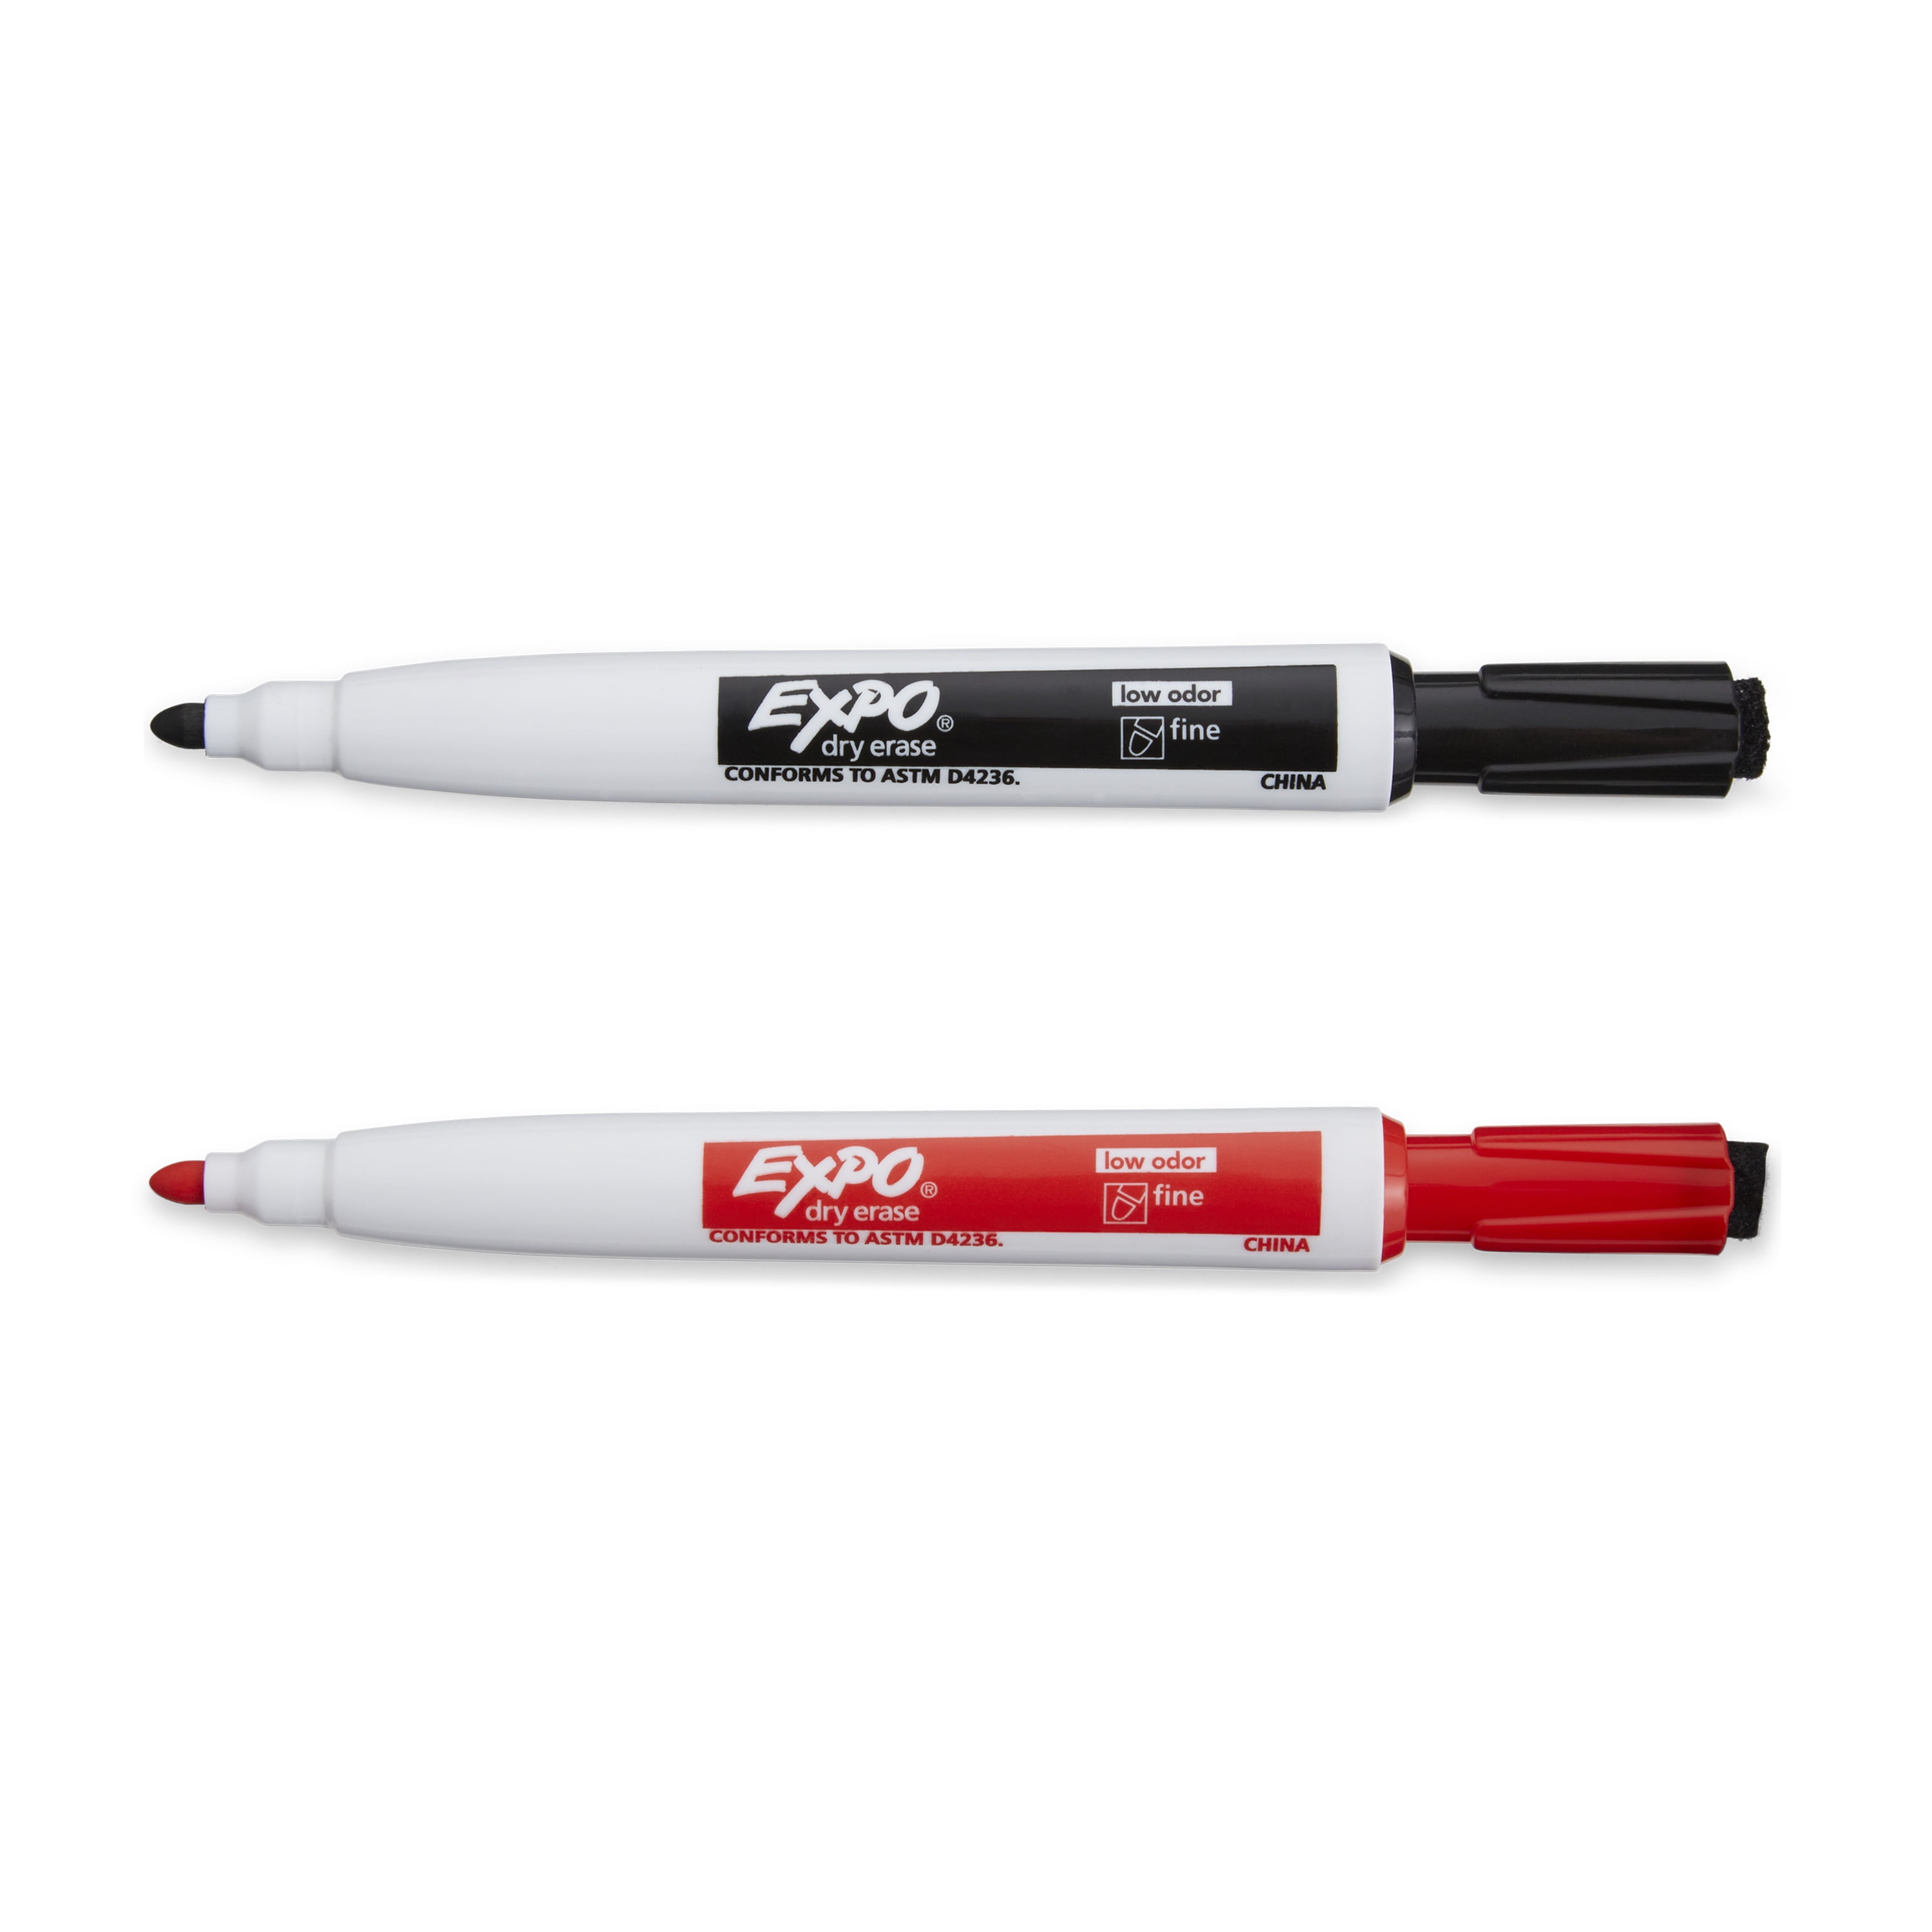 Maxx Whiteboard & Flipchart Markers, Red, Box of 10 - PSY12900210, Rediform Inc